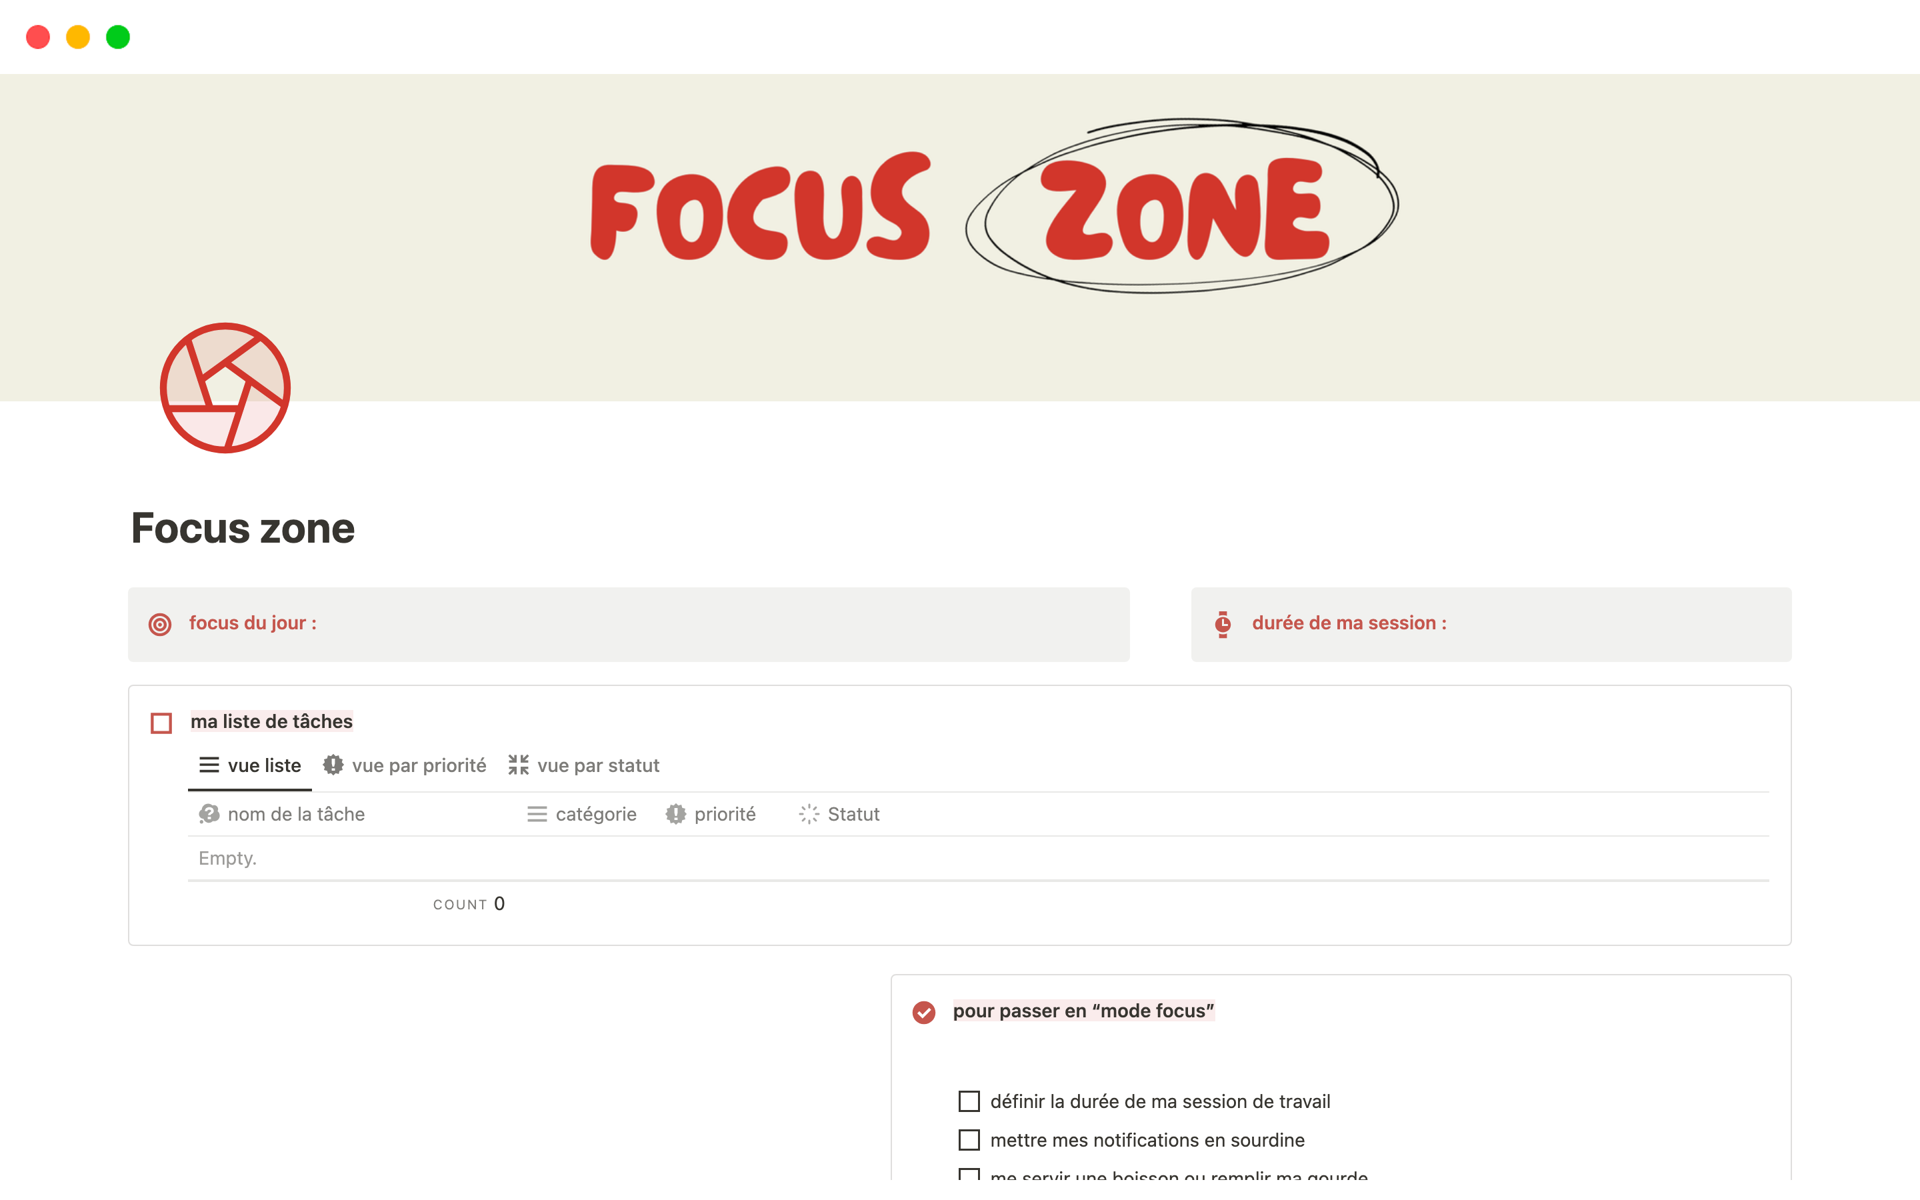 Aperçu du modèle de Focus zone